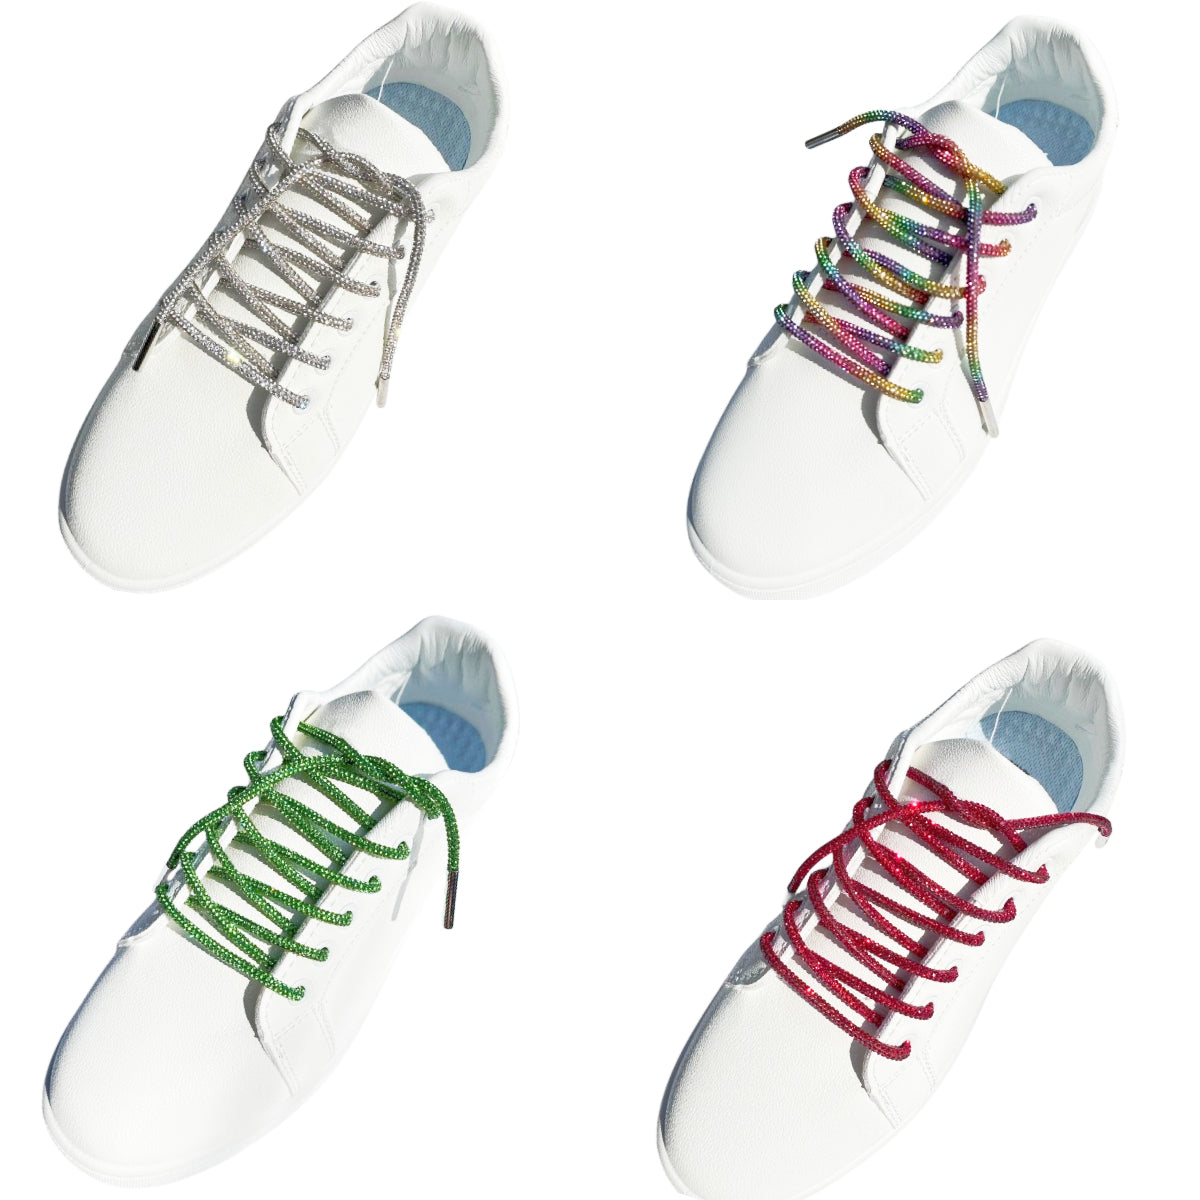 Colorful Rhinestones Glitter Shoelaces